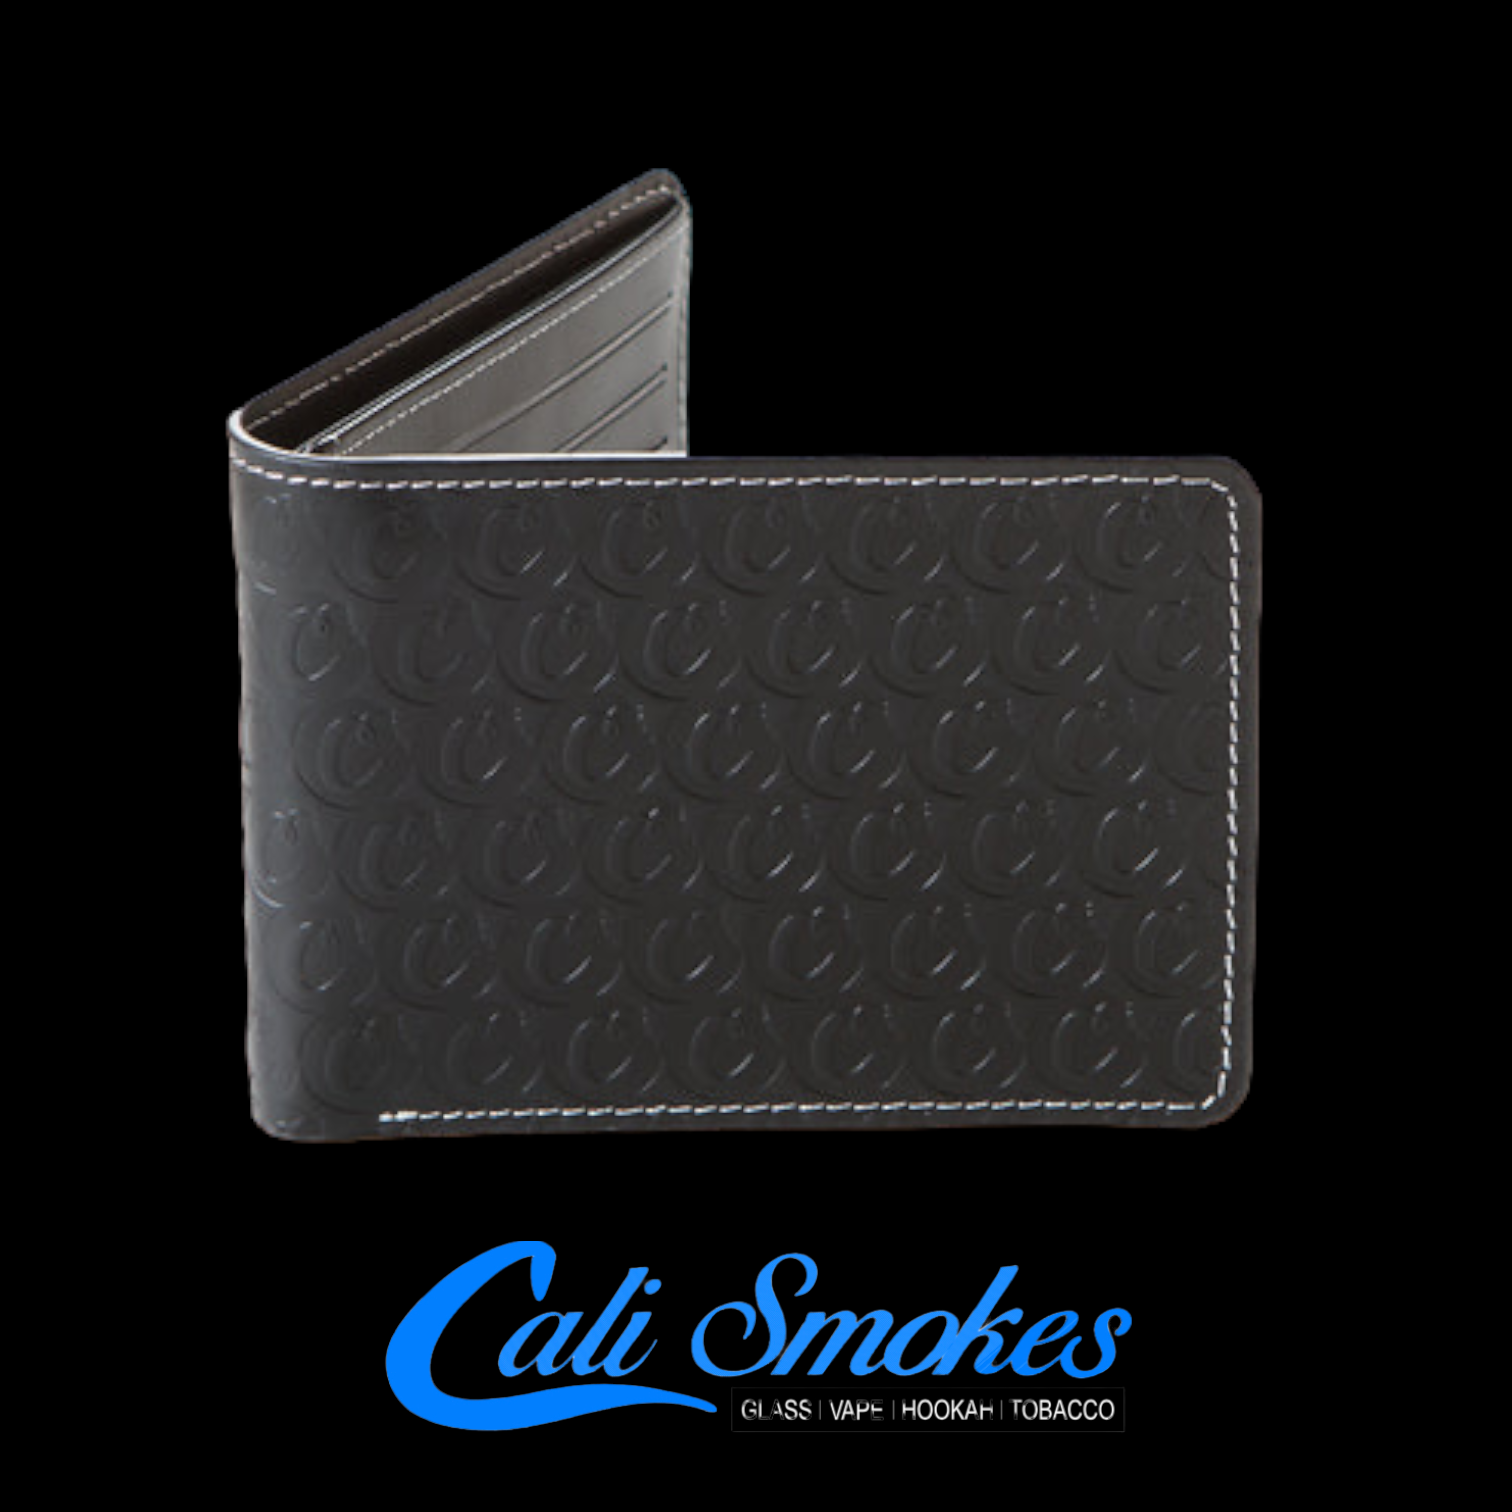 Leather Monogram Wallet – Cookies Clothing